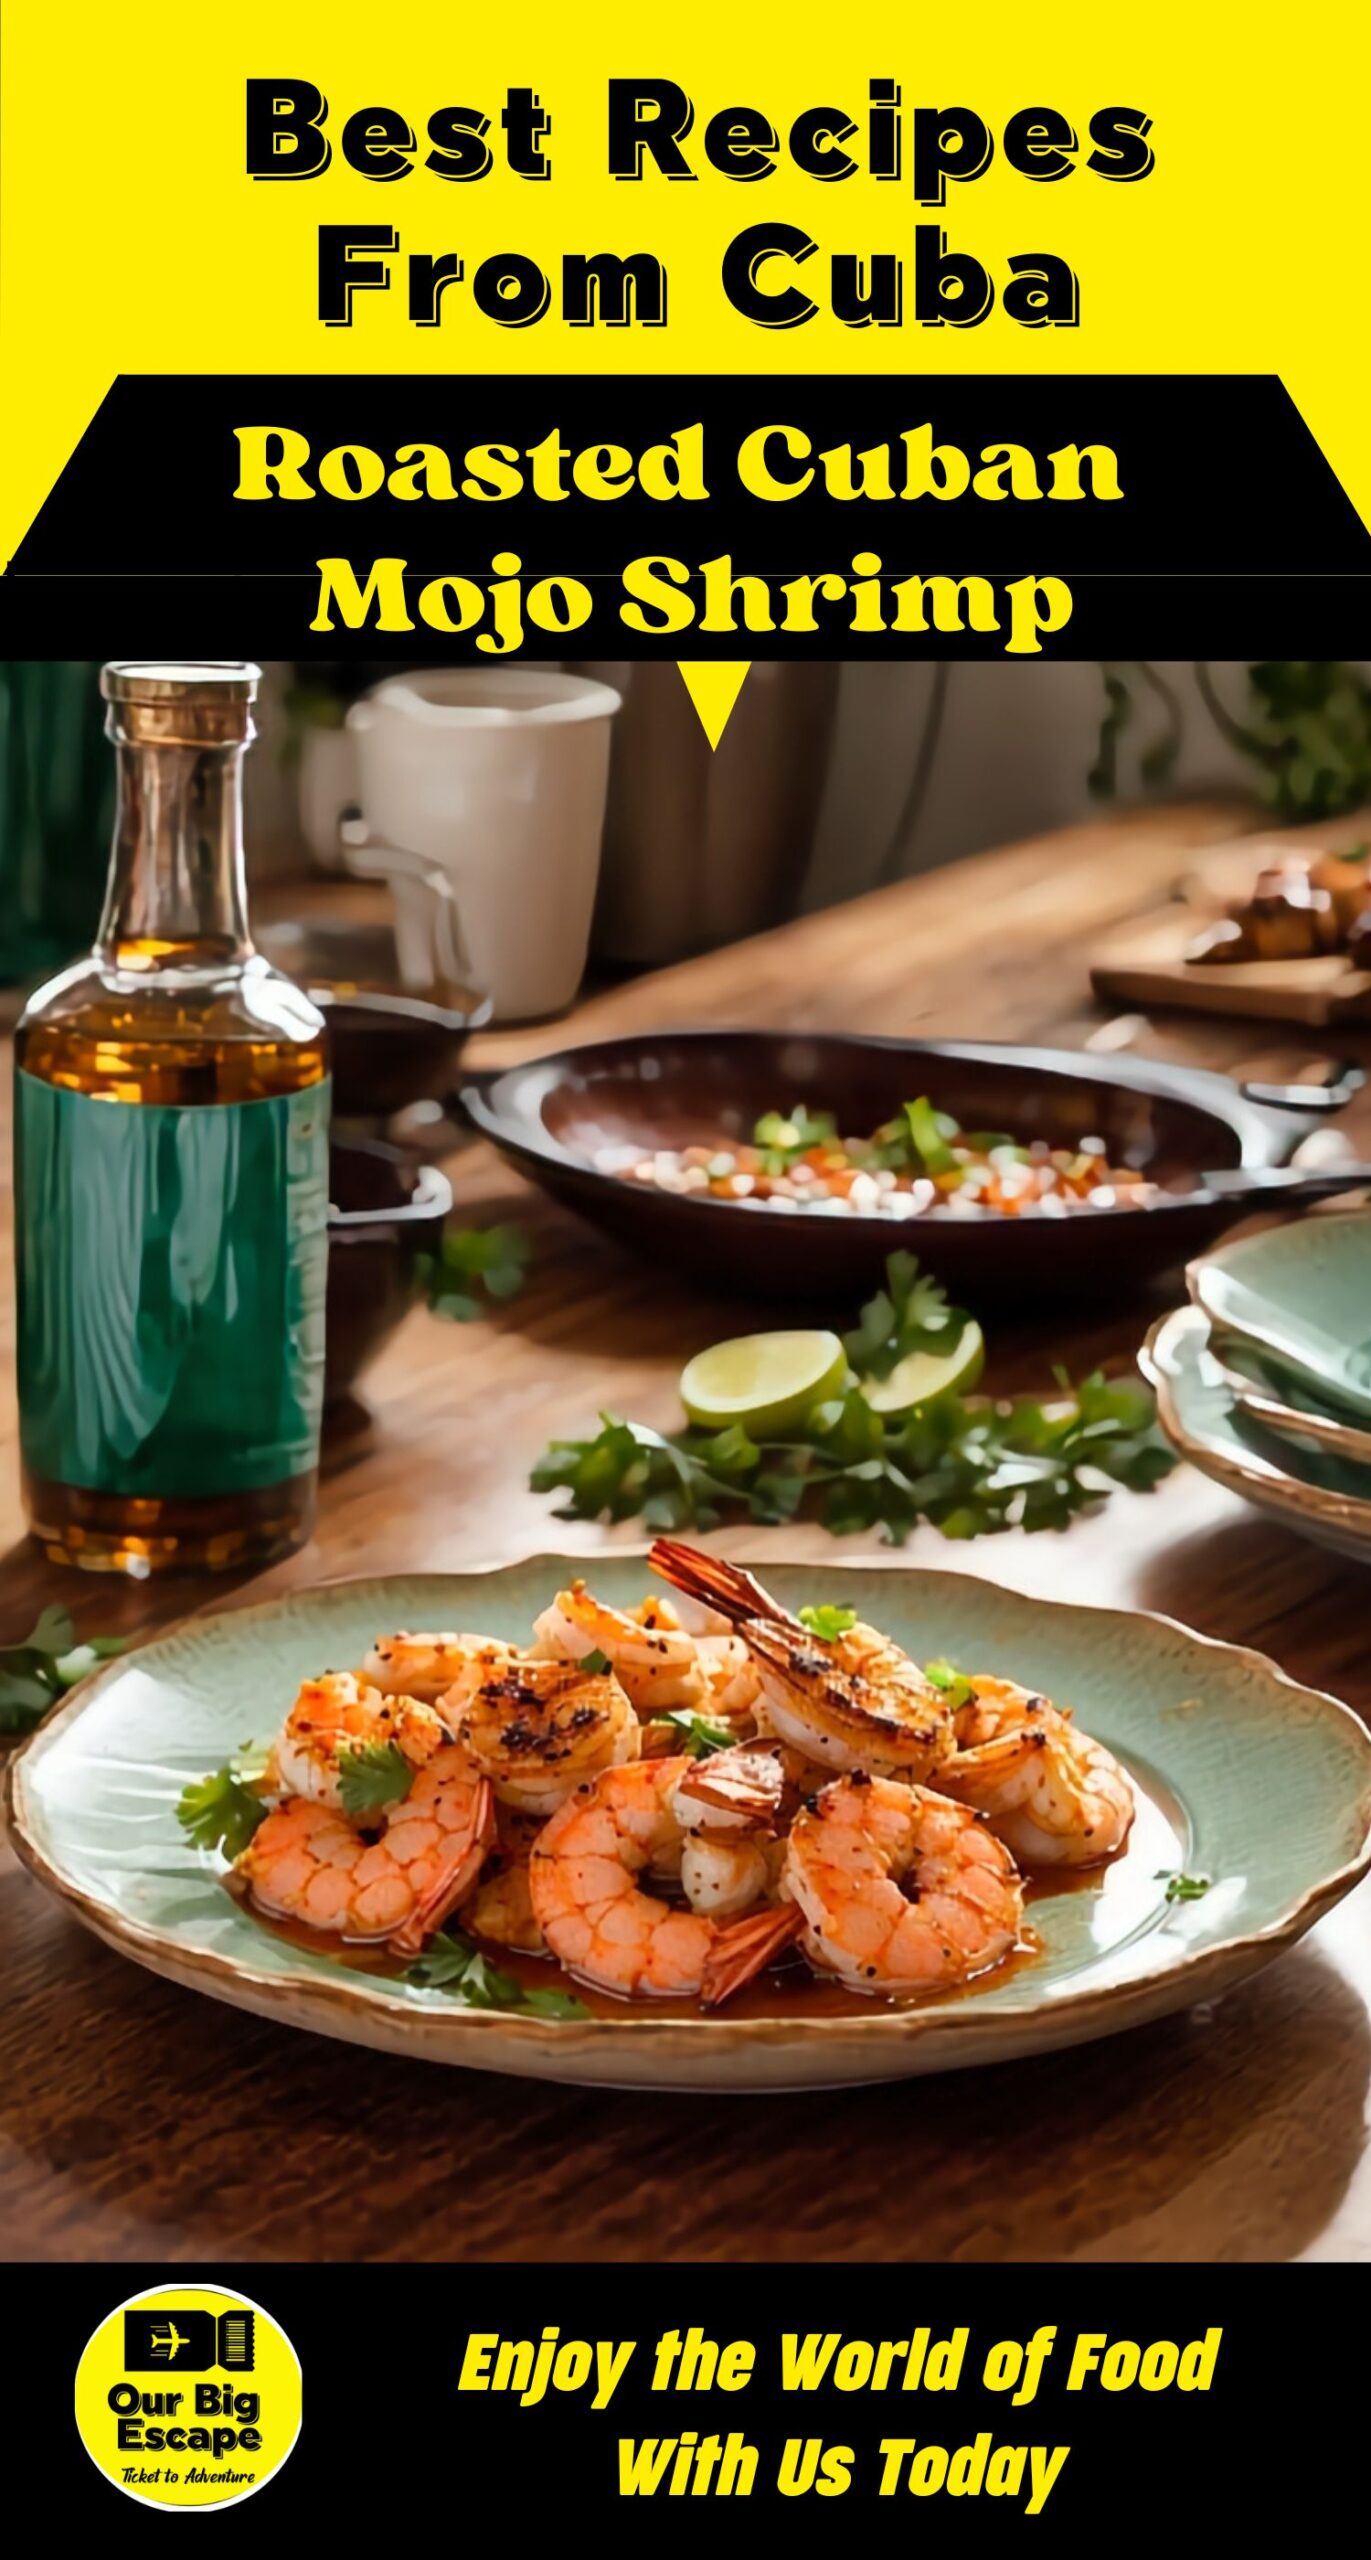 2. Roasted Cuban Mojo Shrimp (1)